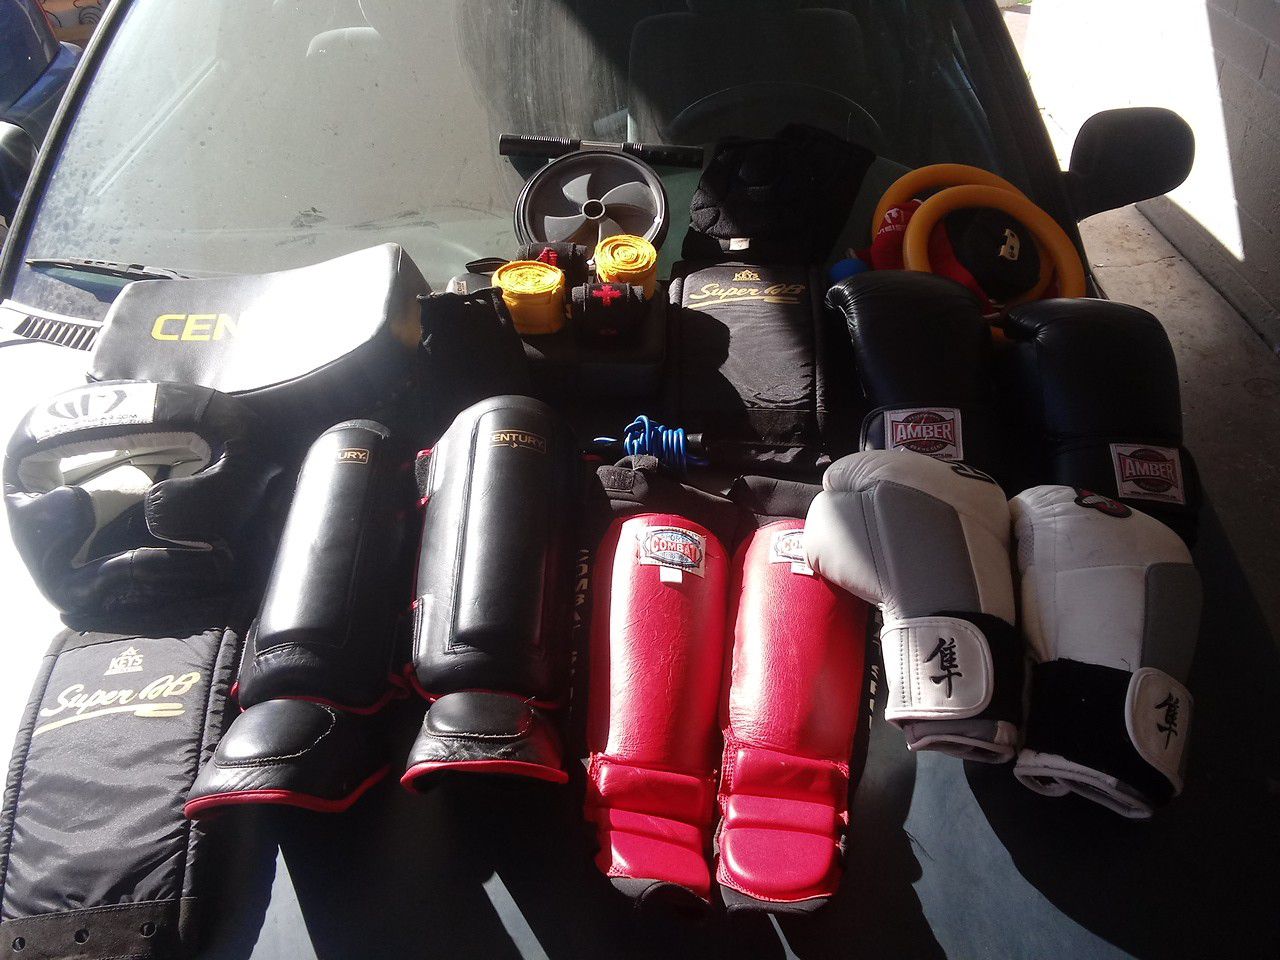 Various kickboxing gear